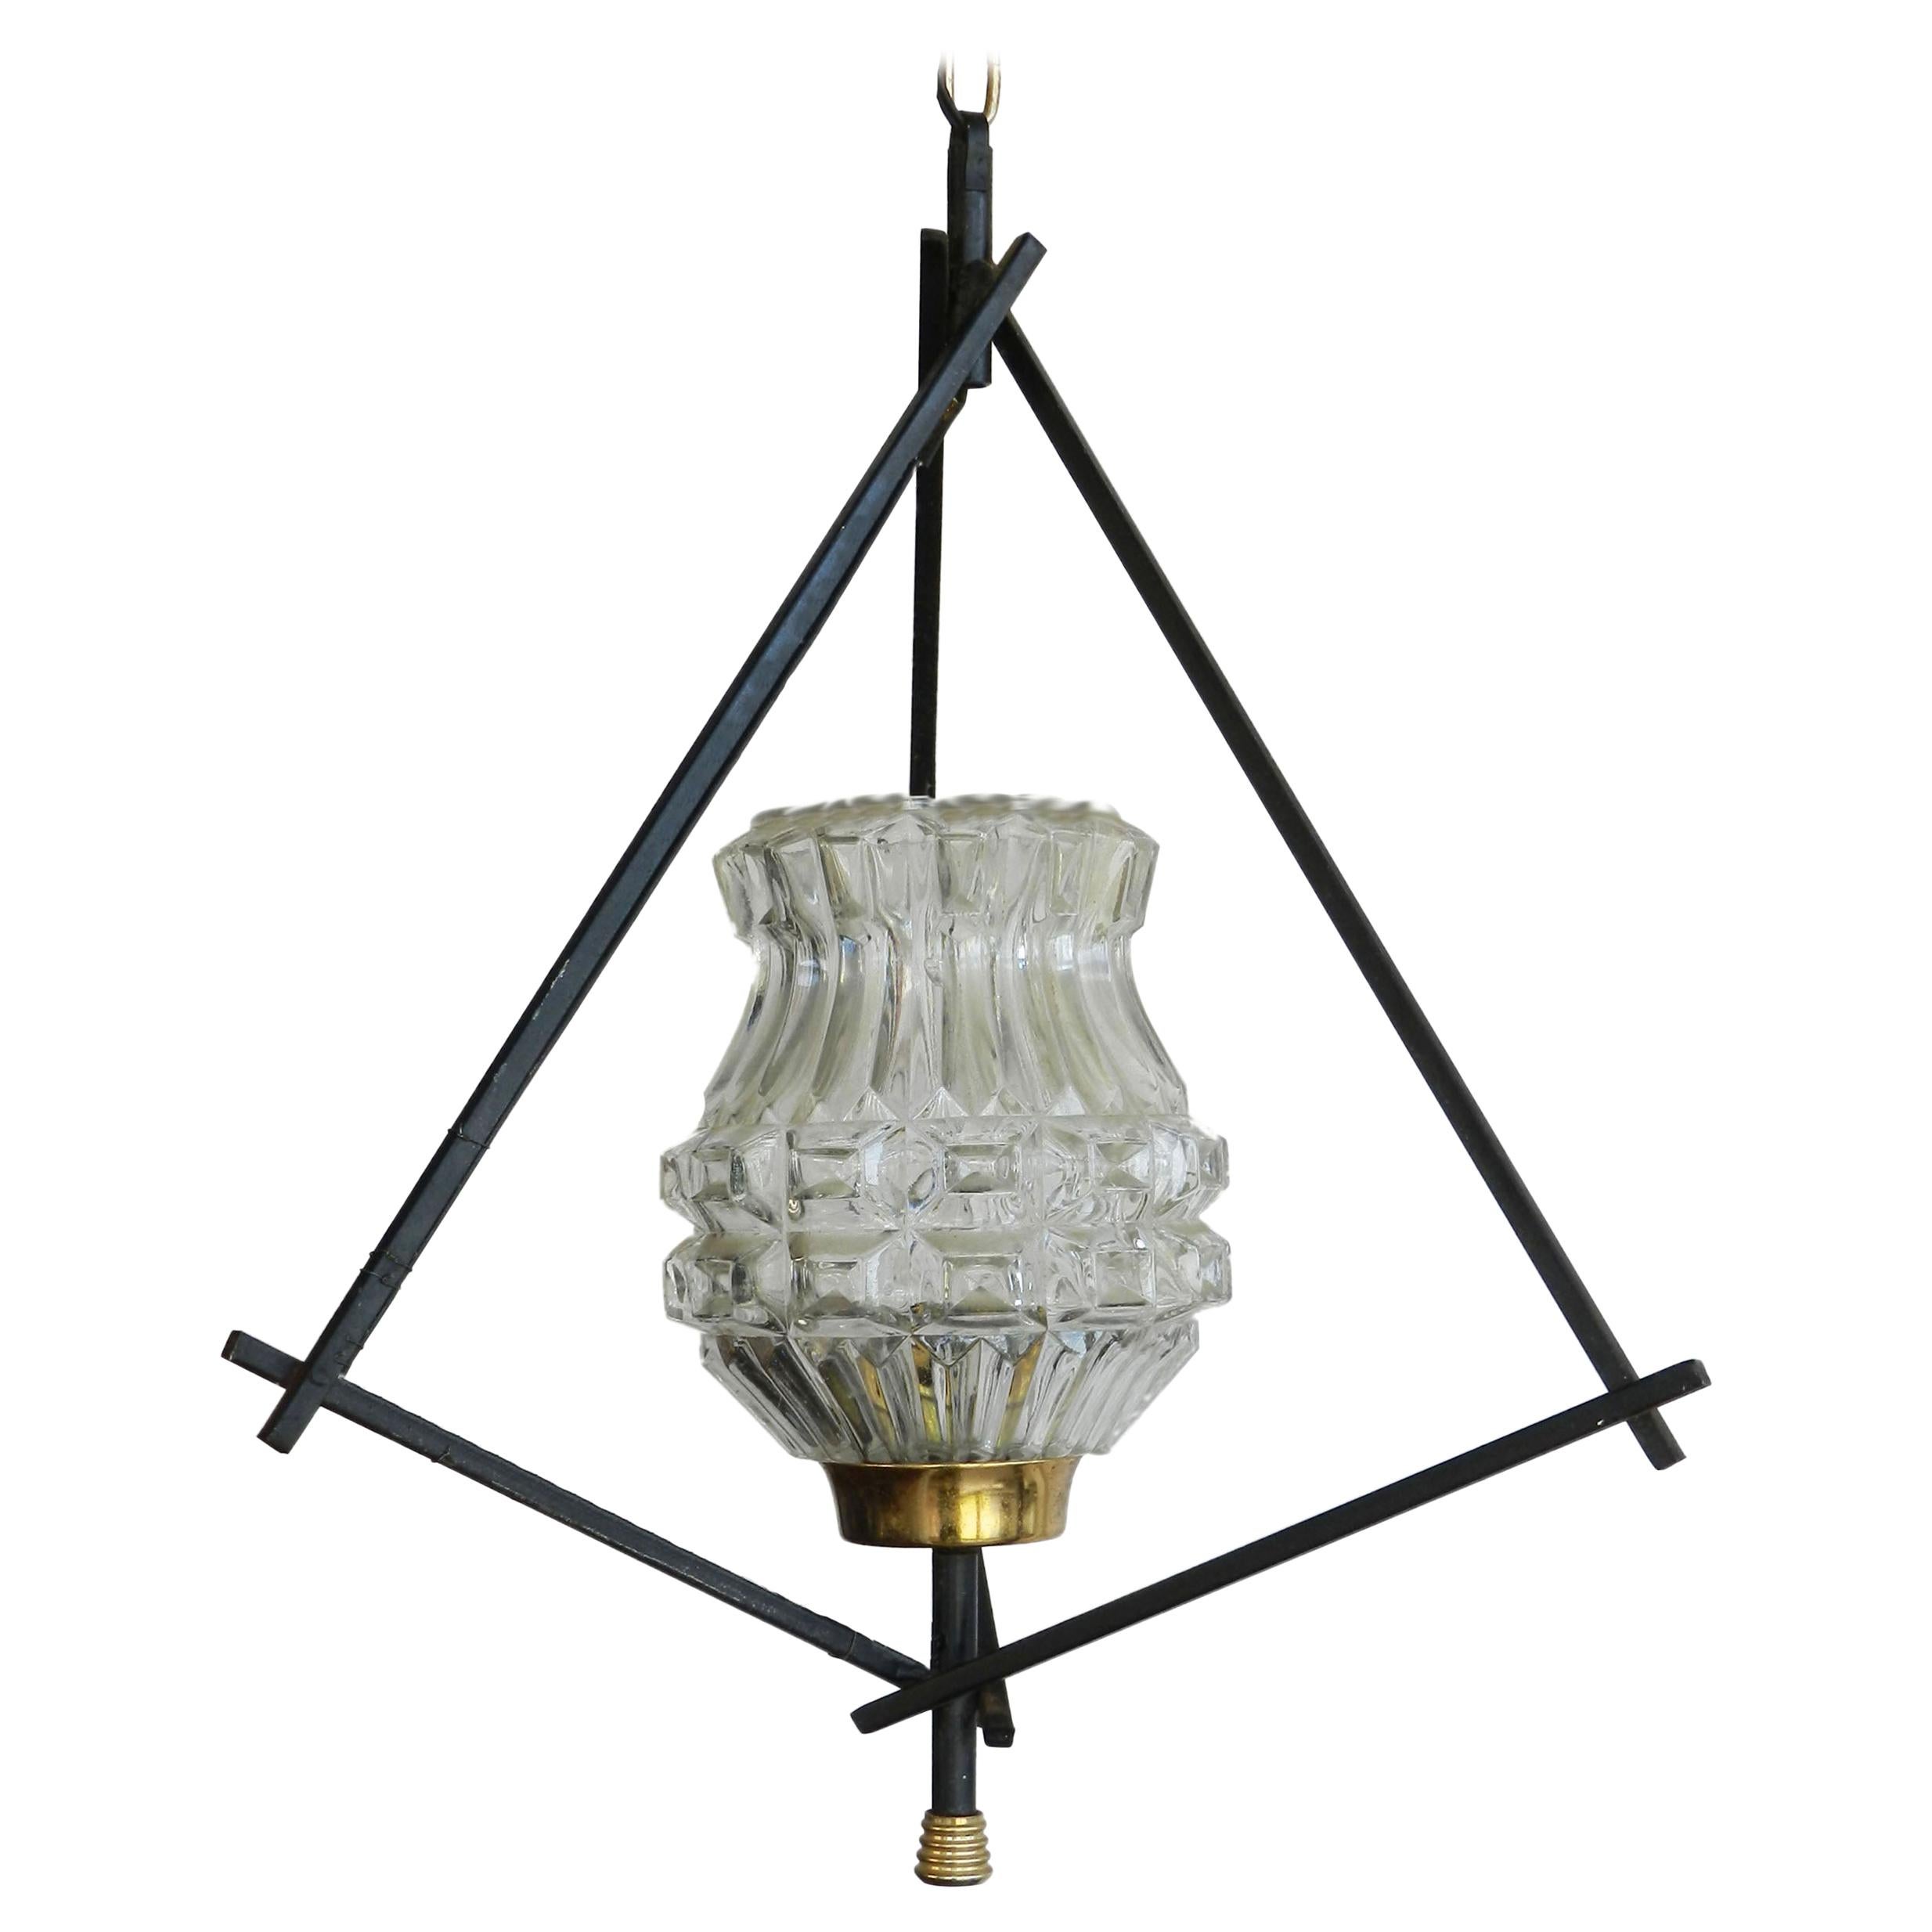 Midcentury Pendant Light Lantern Tripod Metal Frame FREE SHIPPING For Sale